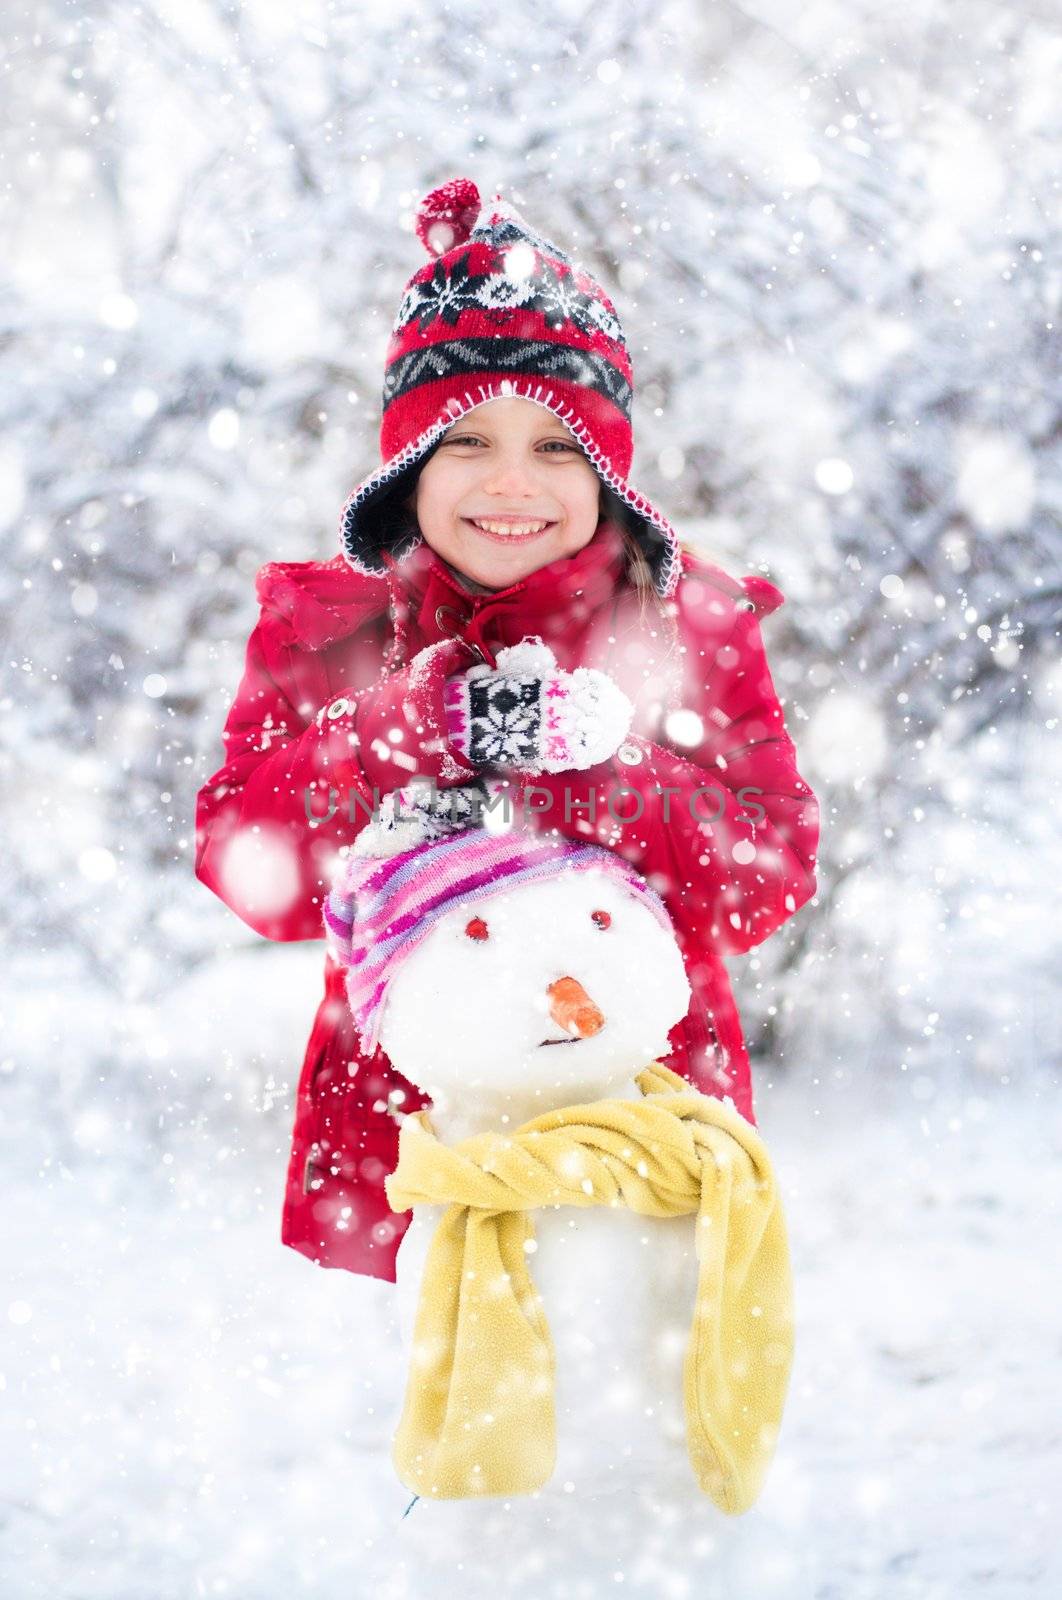 Little girl and snowman by GekaSkr